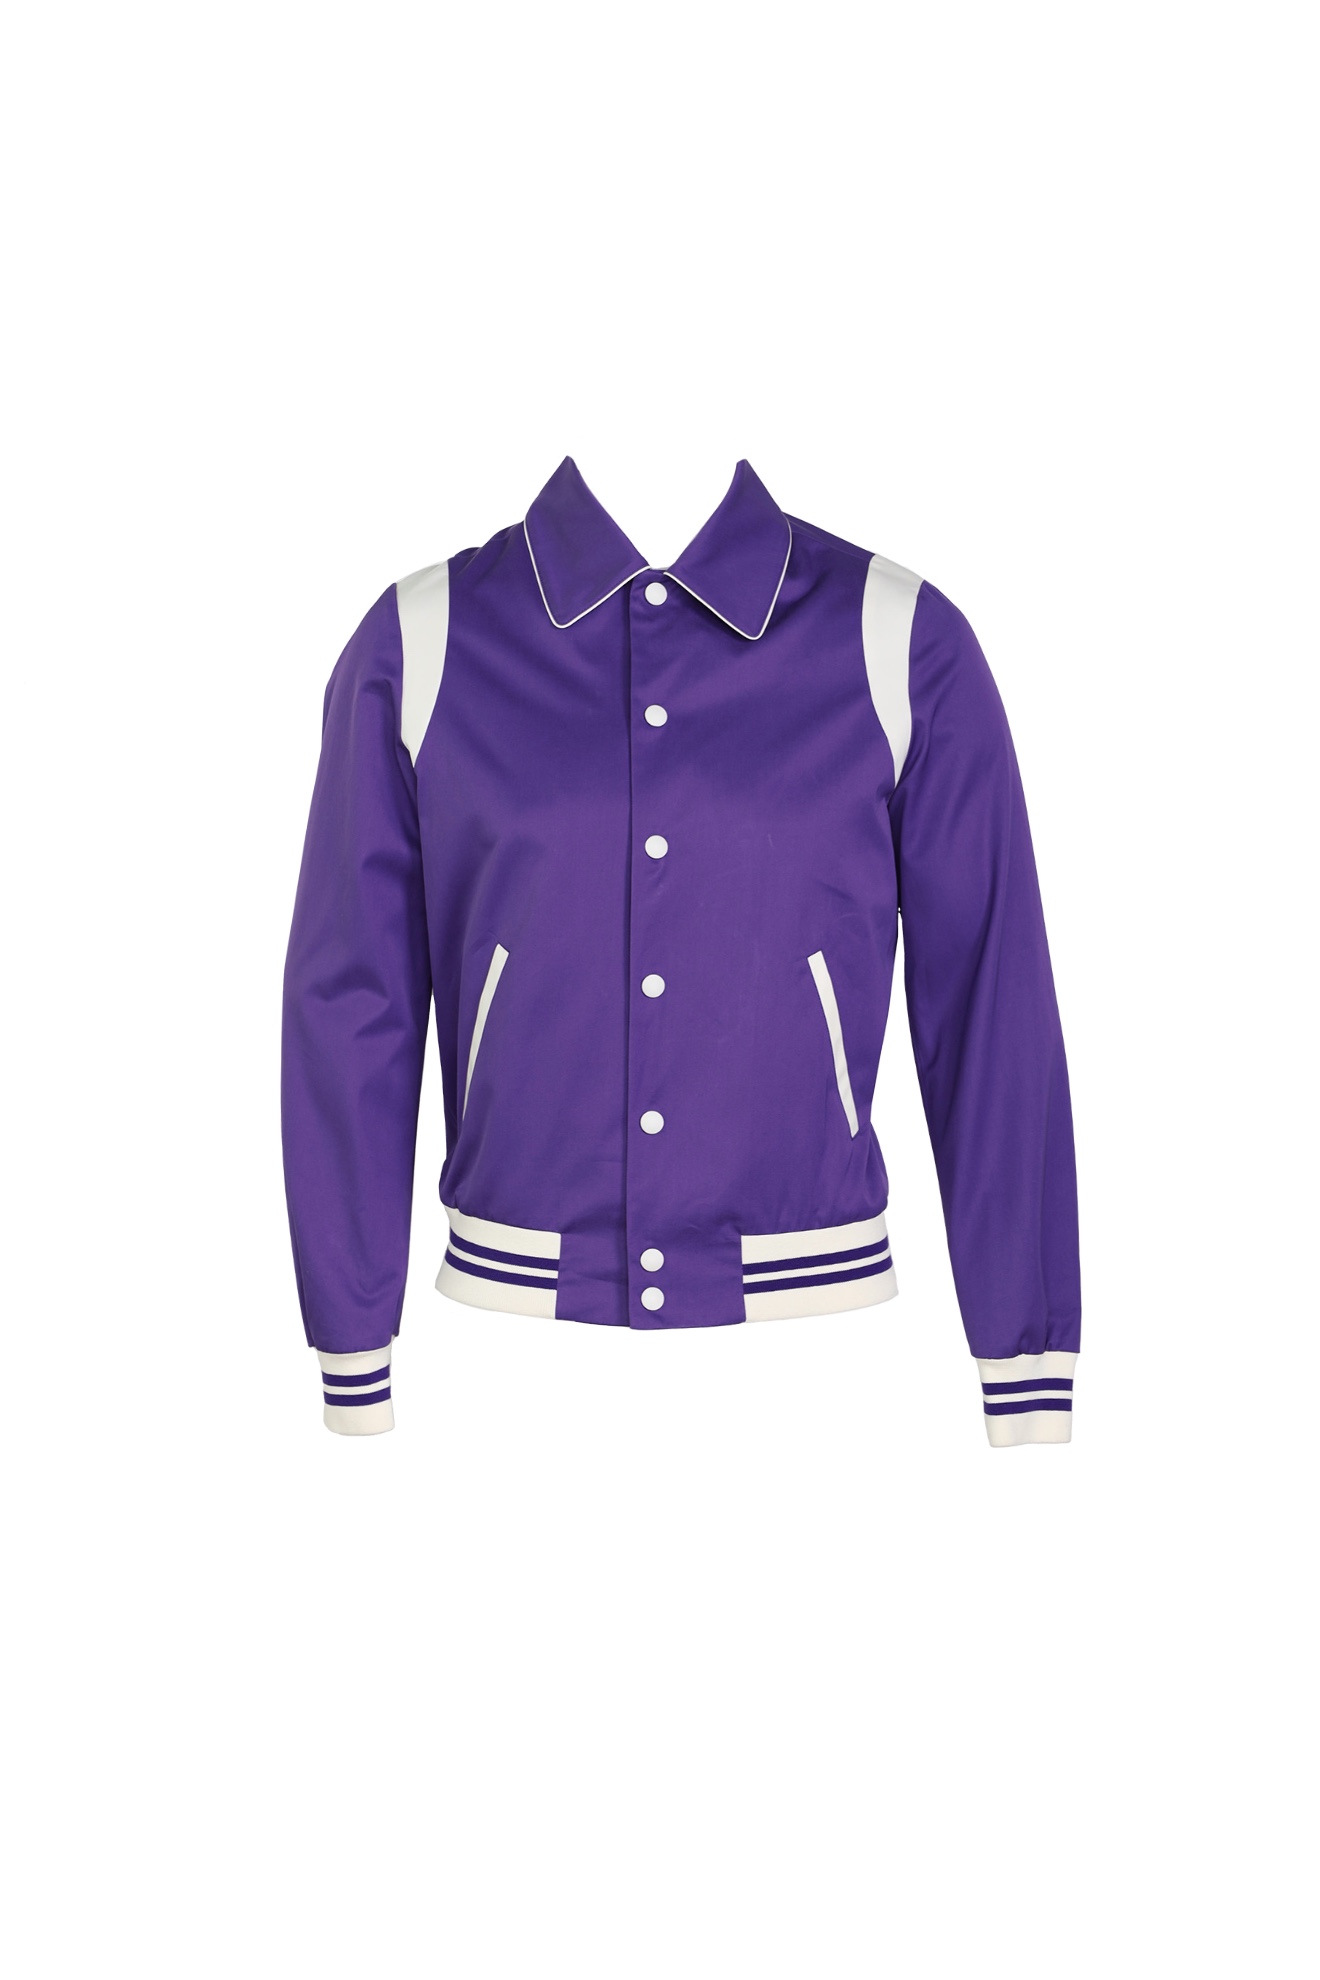 PT Torino College style cotton jacket purple 48